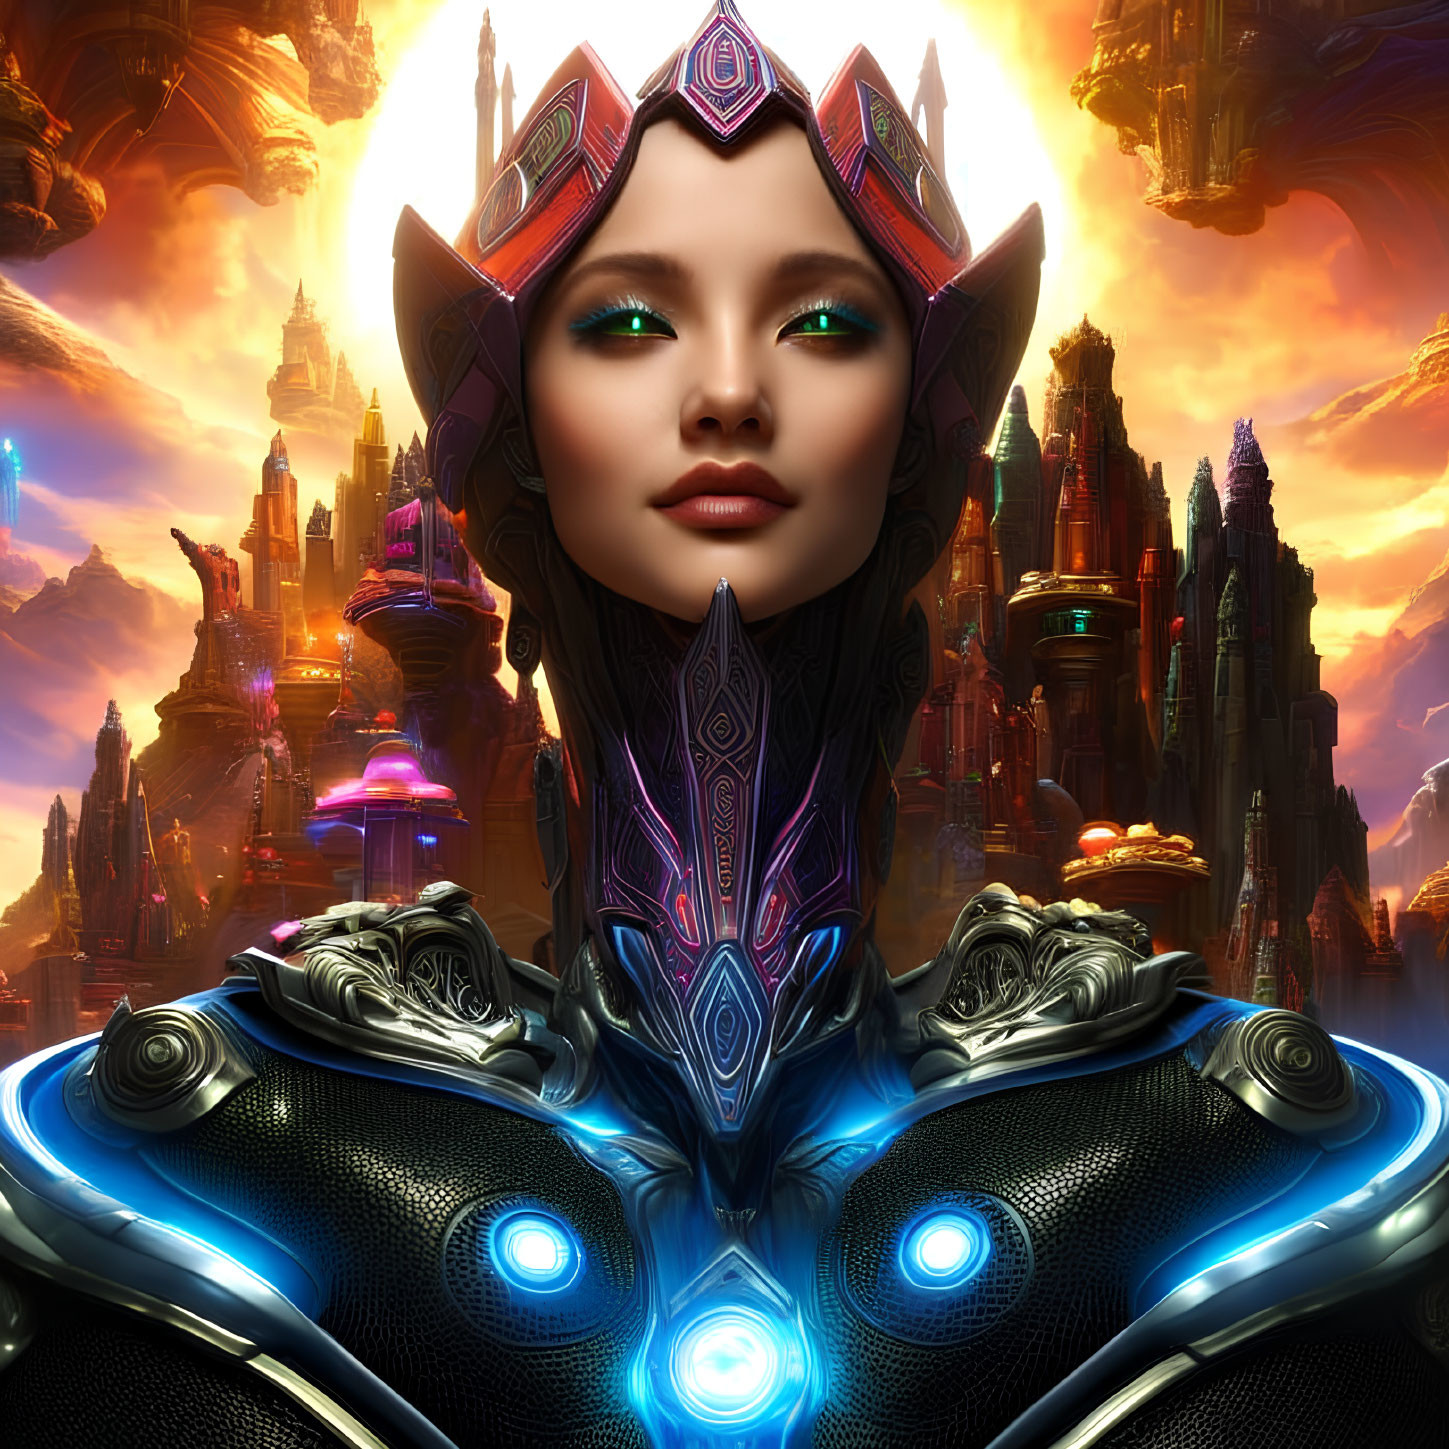 Futuristic female figure in high-tech armor with elaborate headgear before sci-fi cityscape